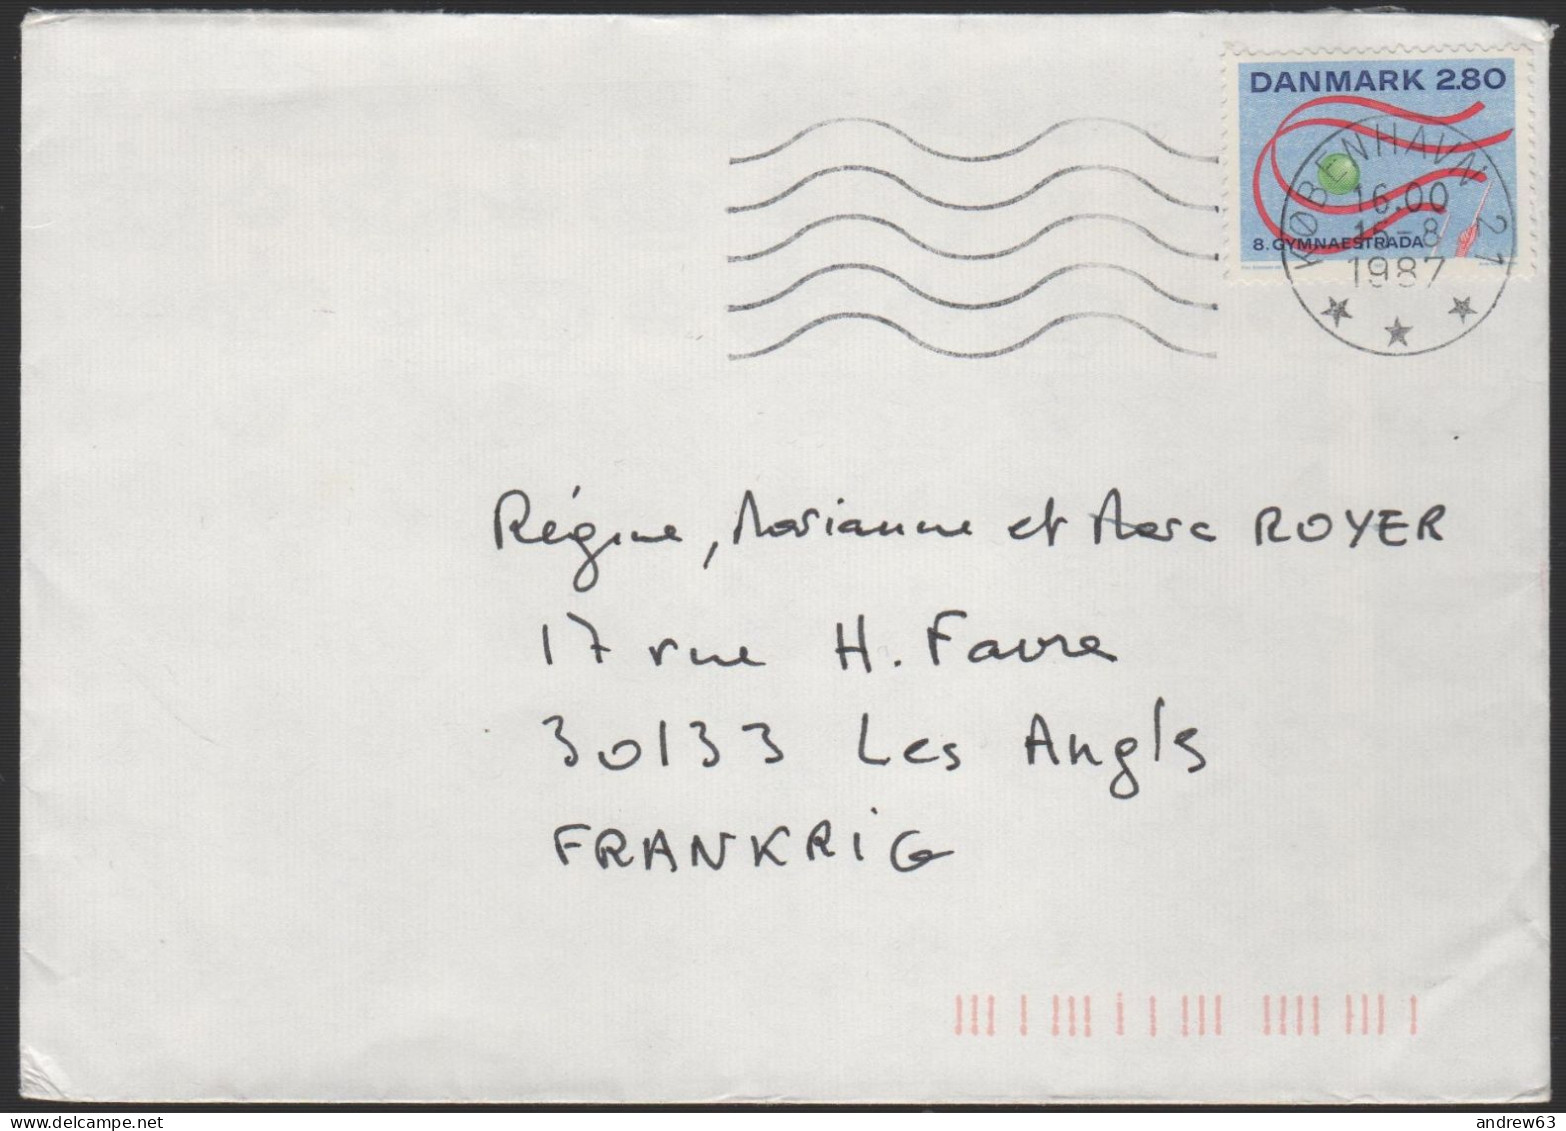 DANIMARCA - DANMARK - 1987 - 2,80 World Gymnastics Show - Viaggiata Da København Per Les Angles, France - Briefe U. Dokumente